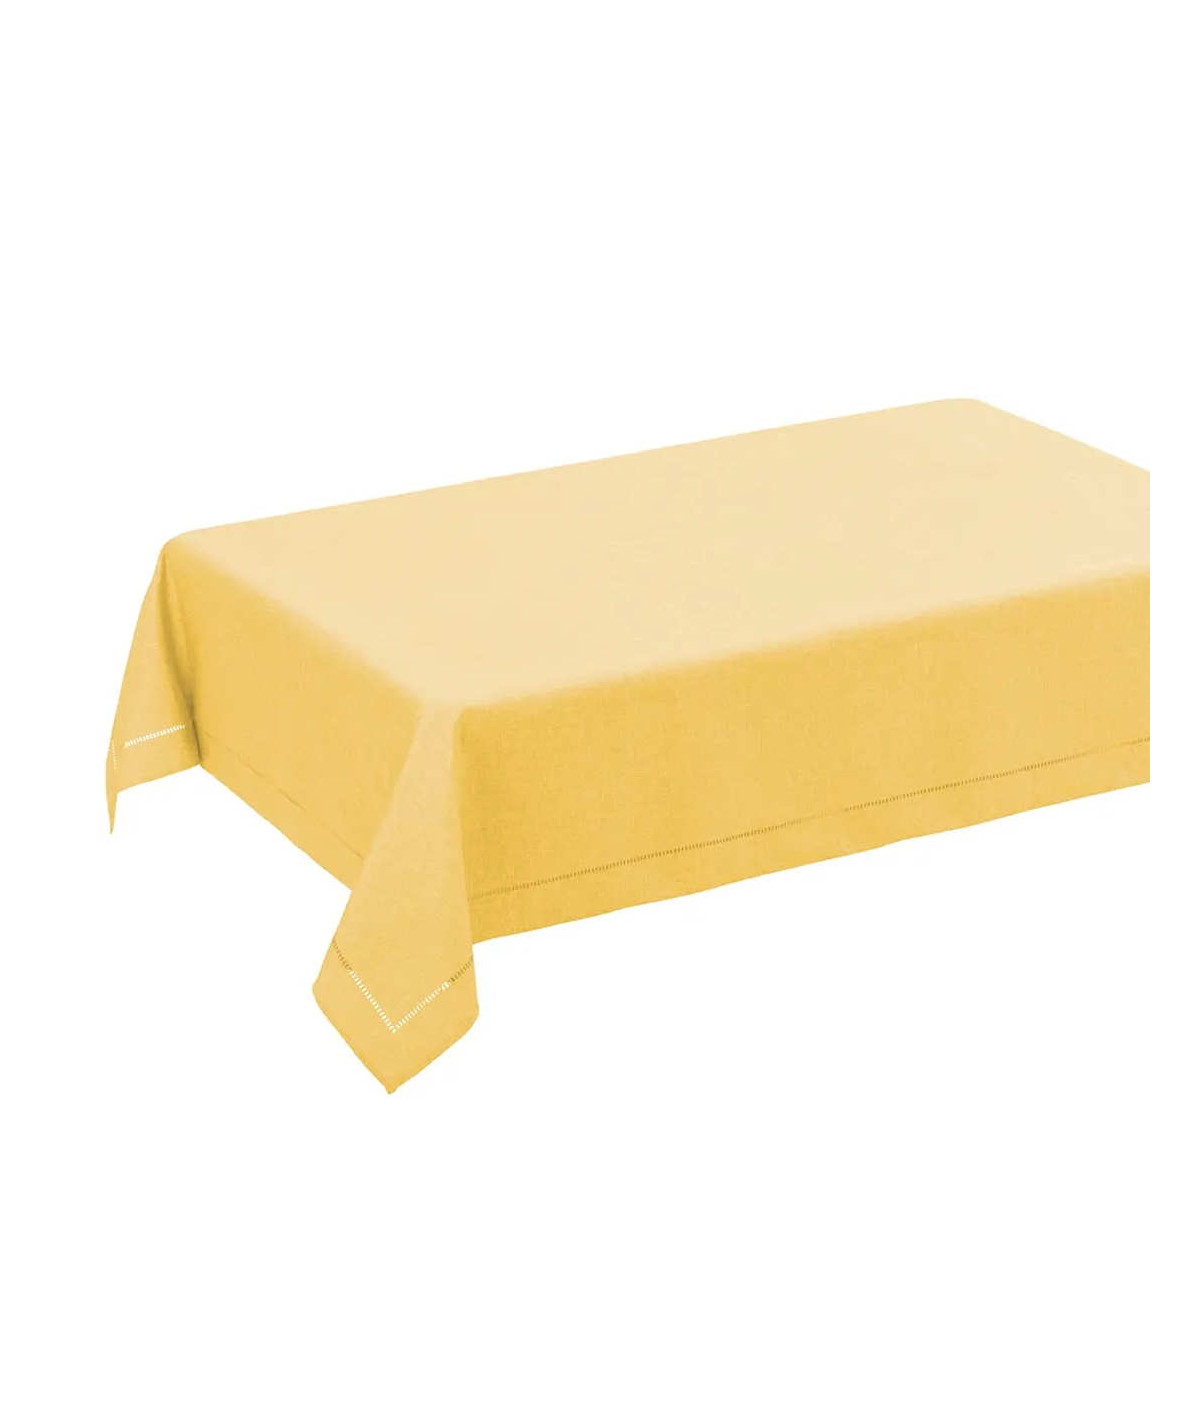 Nappe rectangulaire uni en polyester jaune 150x210cm - Yesdeko